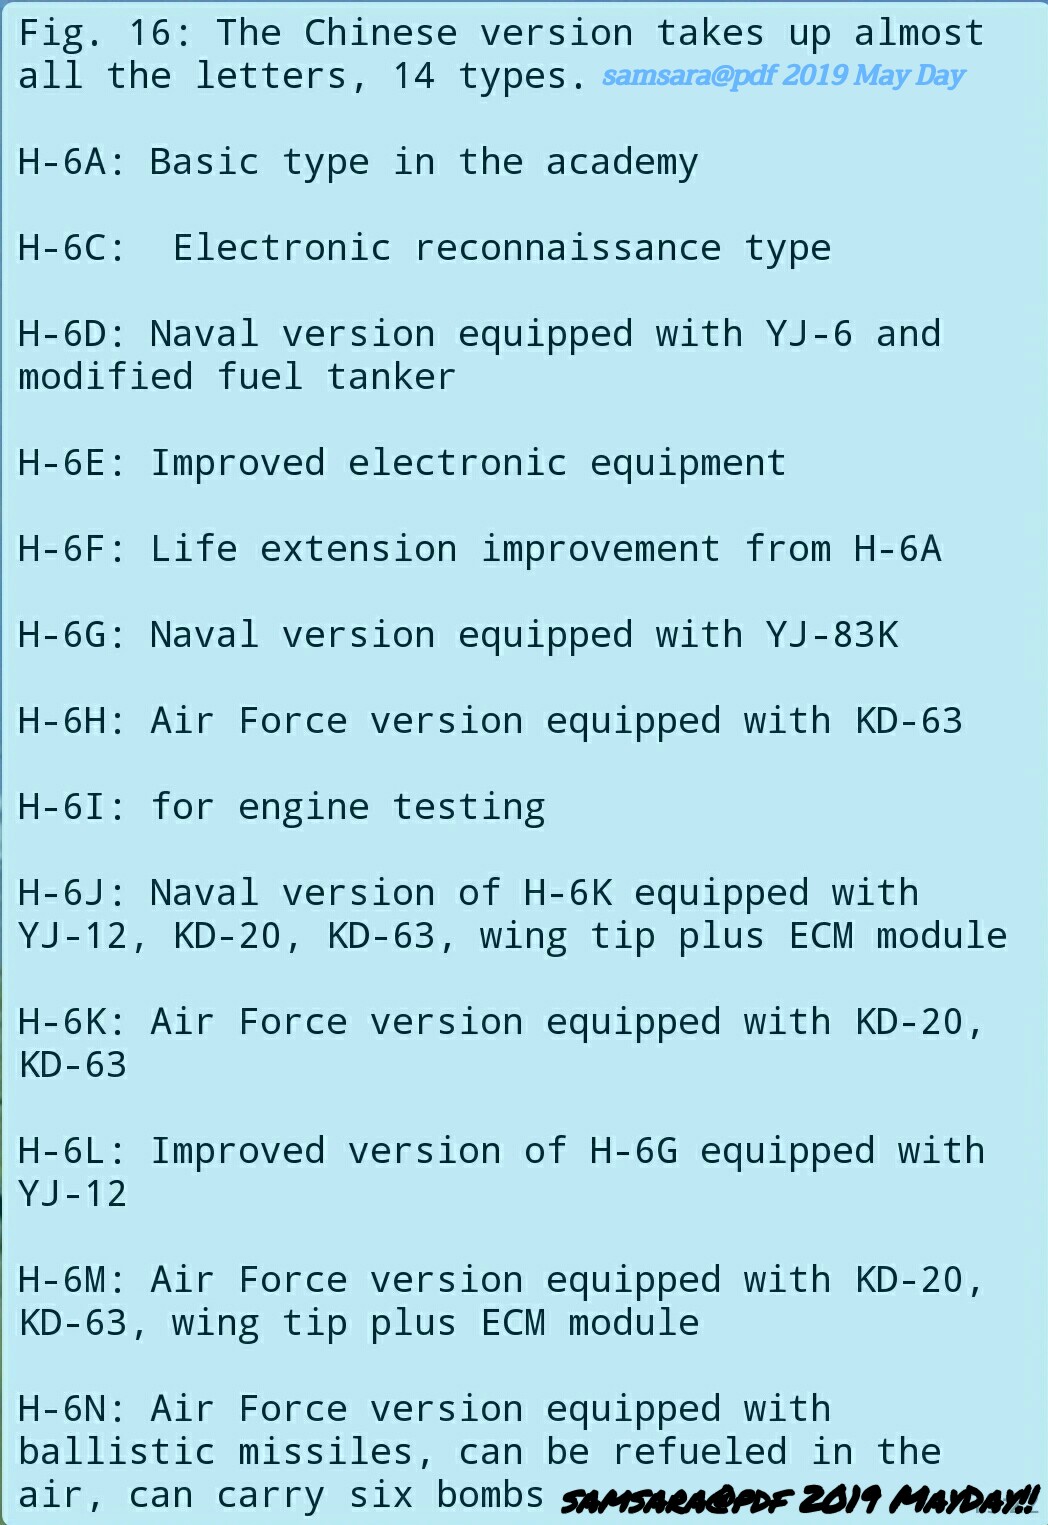 Bomber H-6 series_Translated_20190501 WMed.jpeg